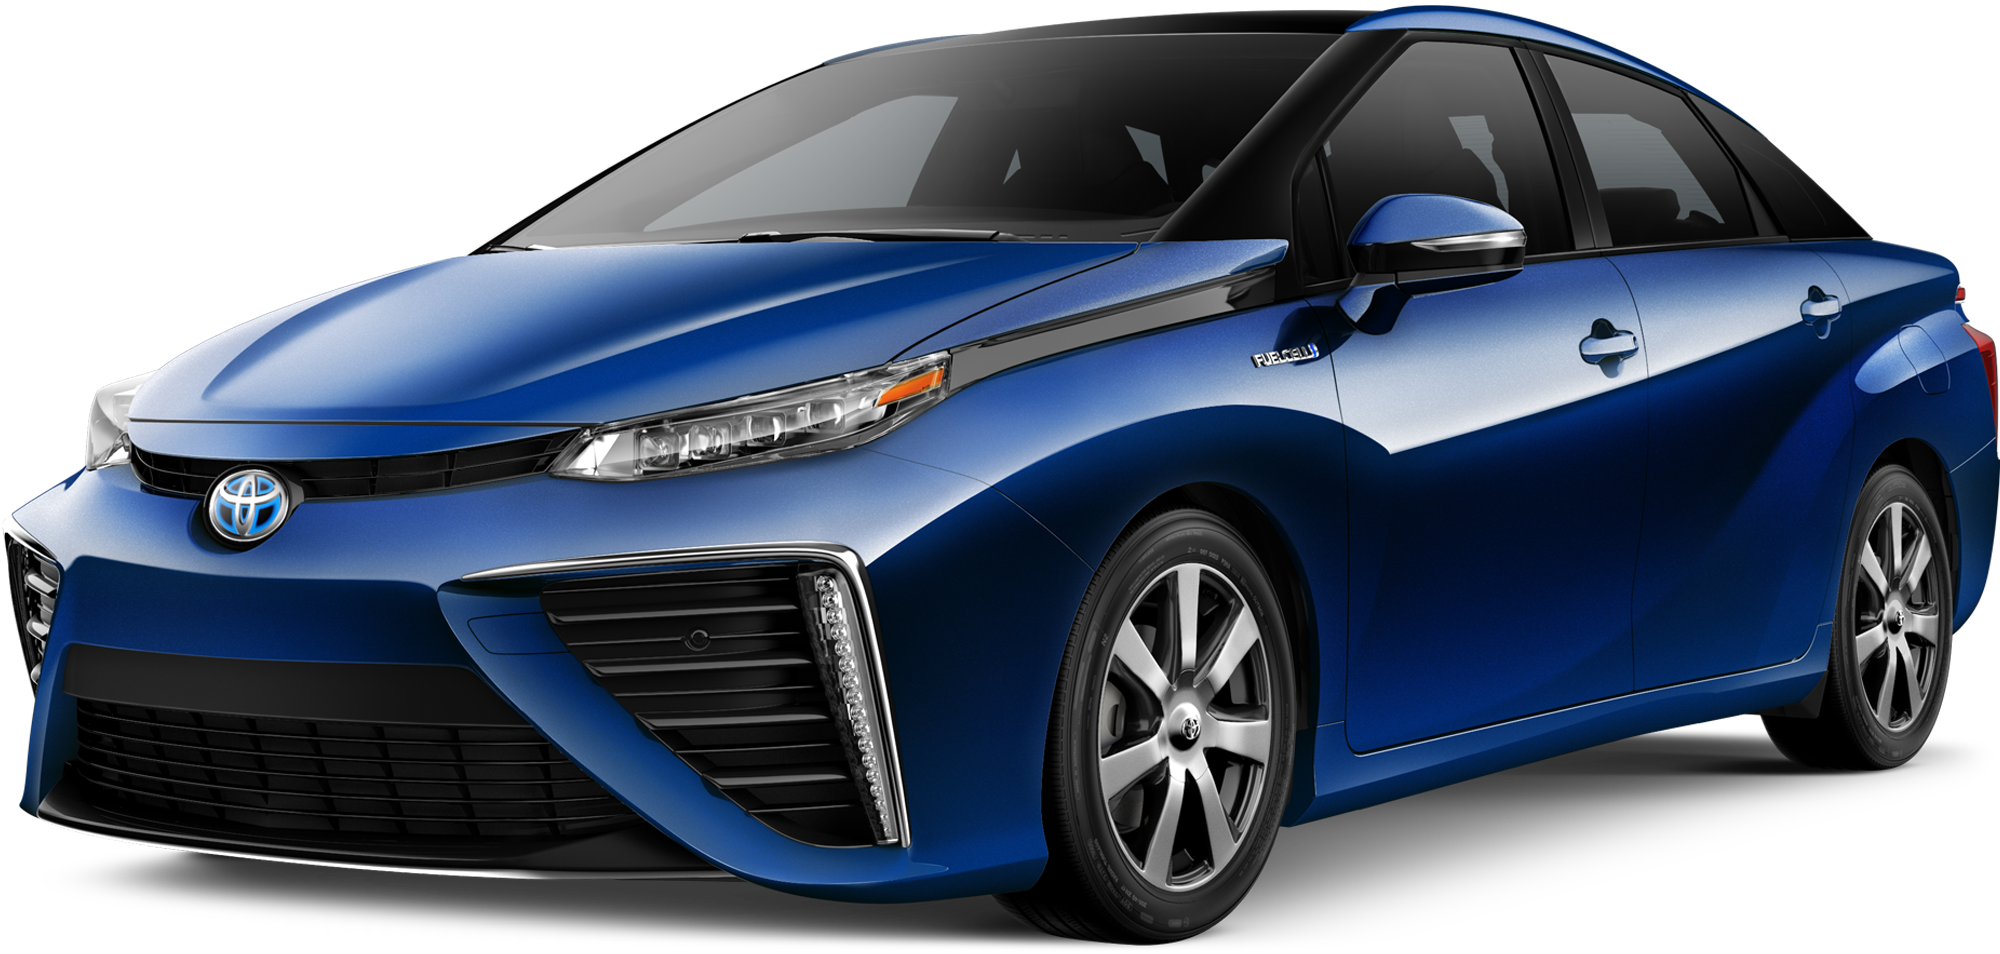 2020 Toyota Mirai Incentives, Specials & Offers in Cerritos CA